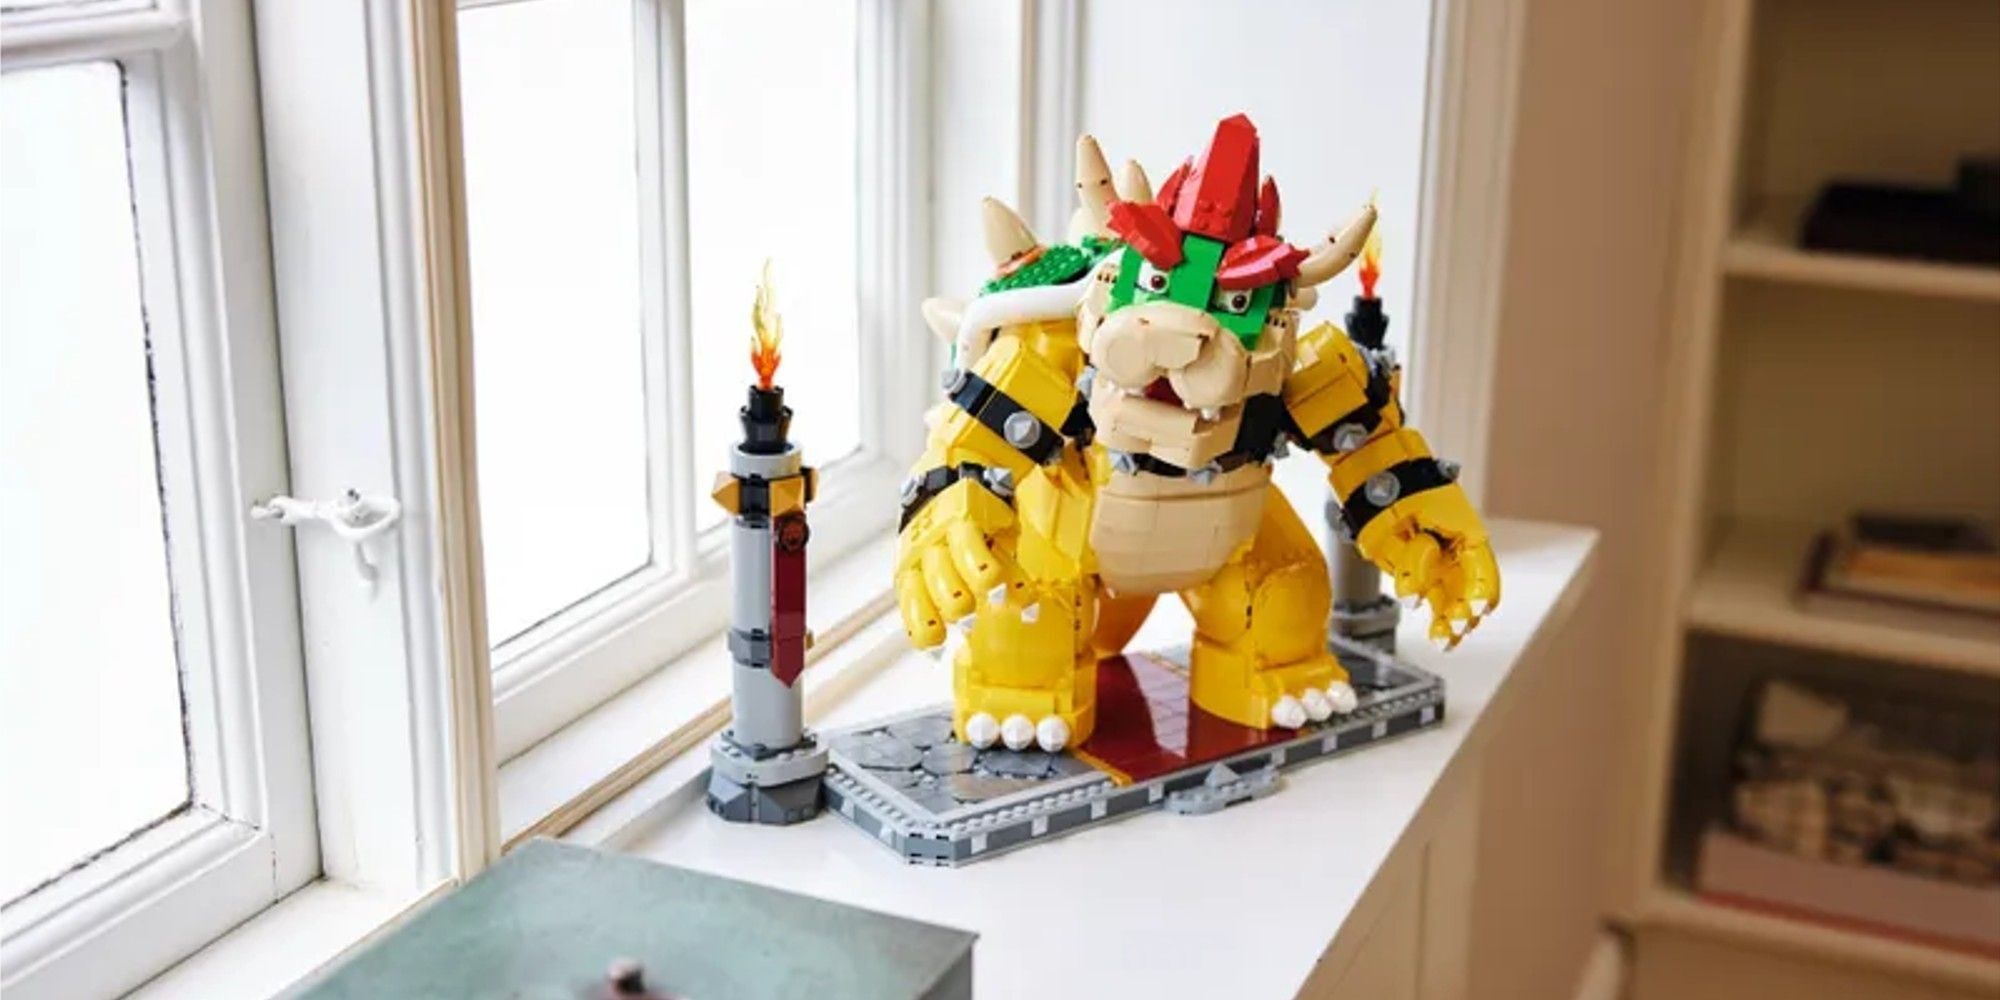 Lego Bowser on a shelf by the window